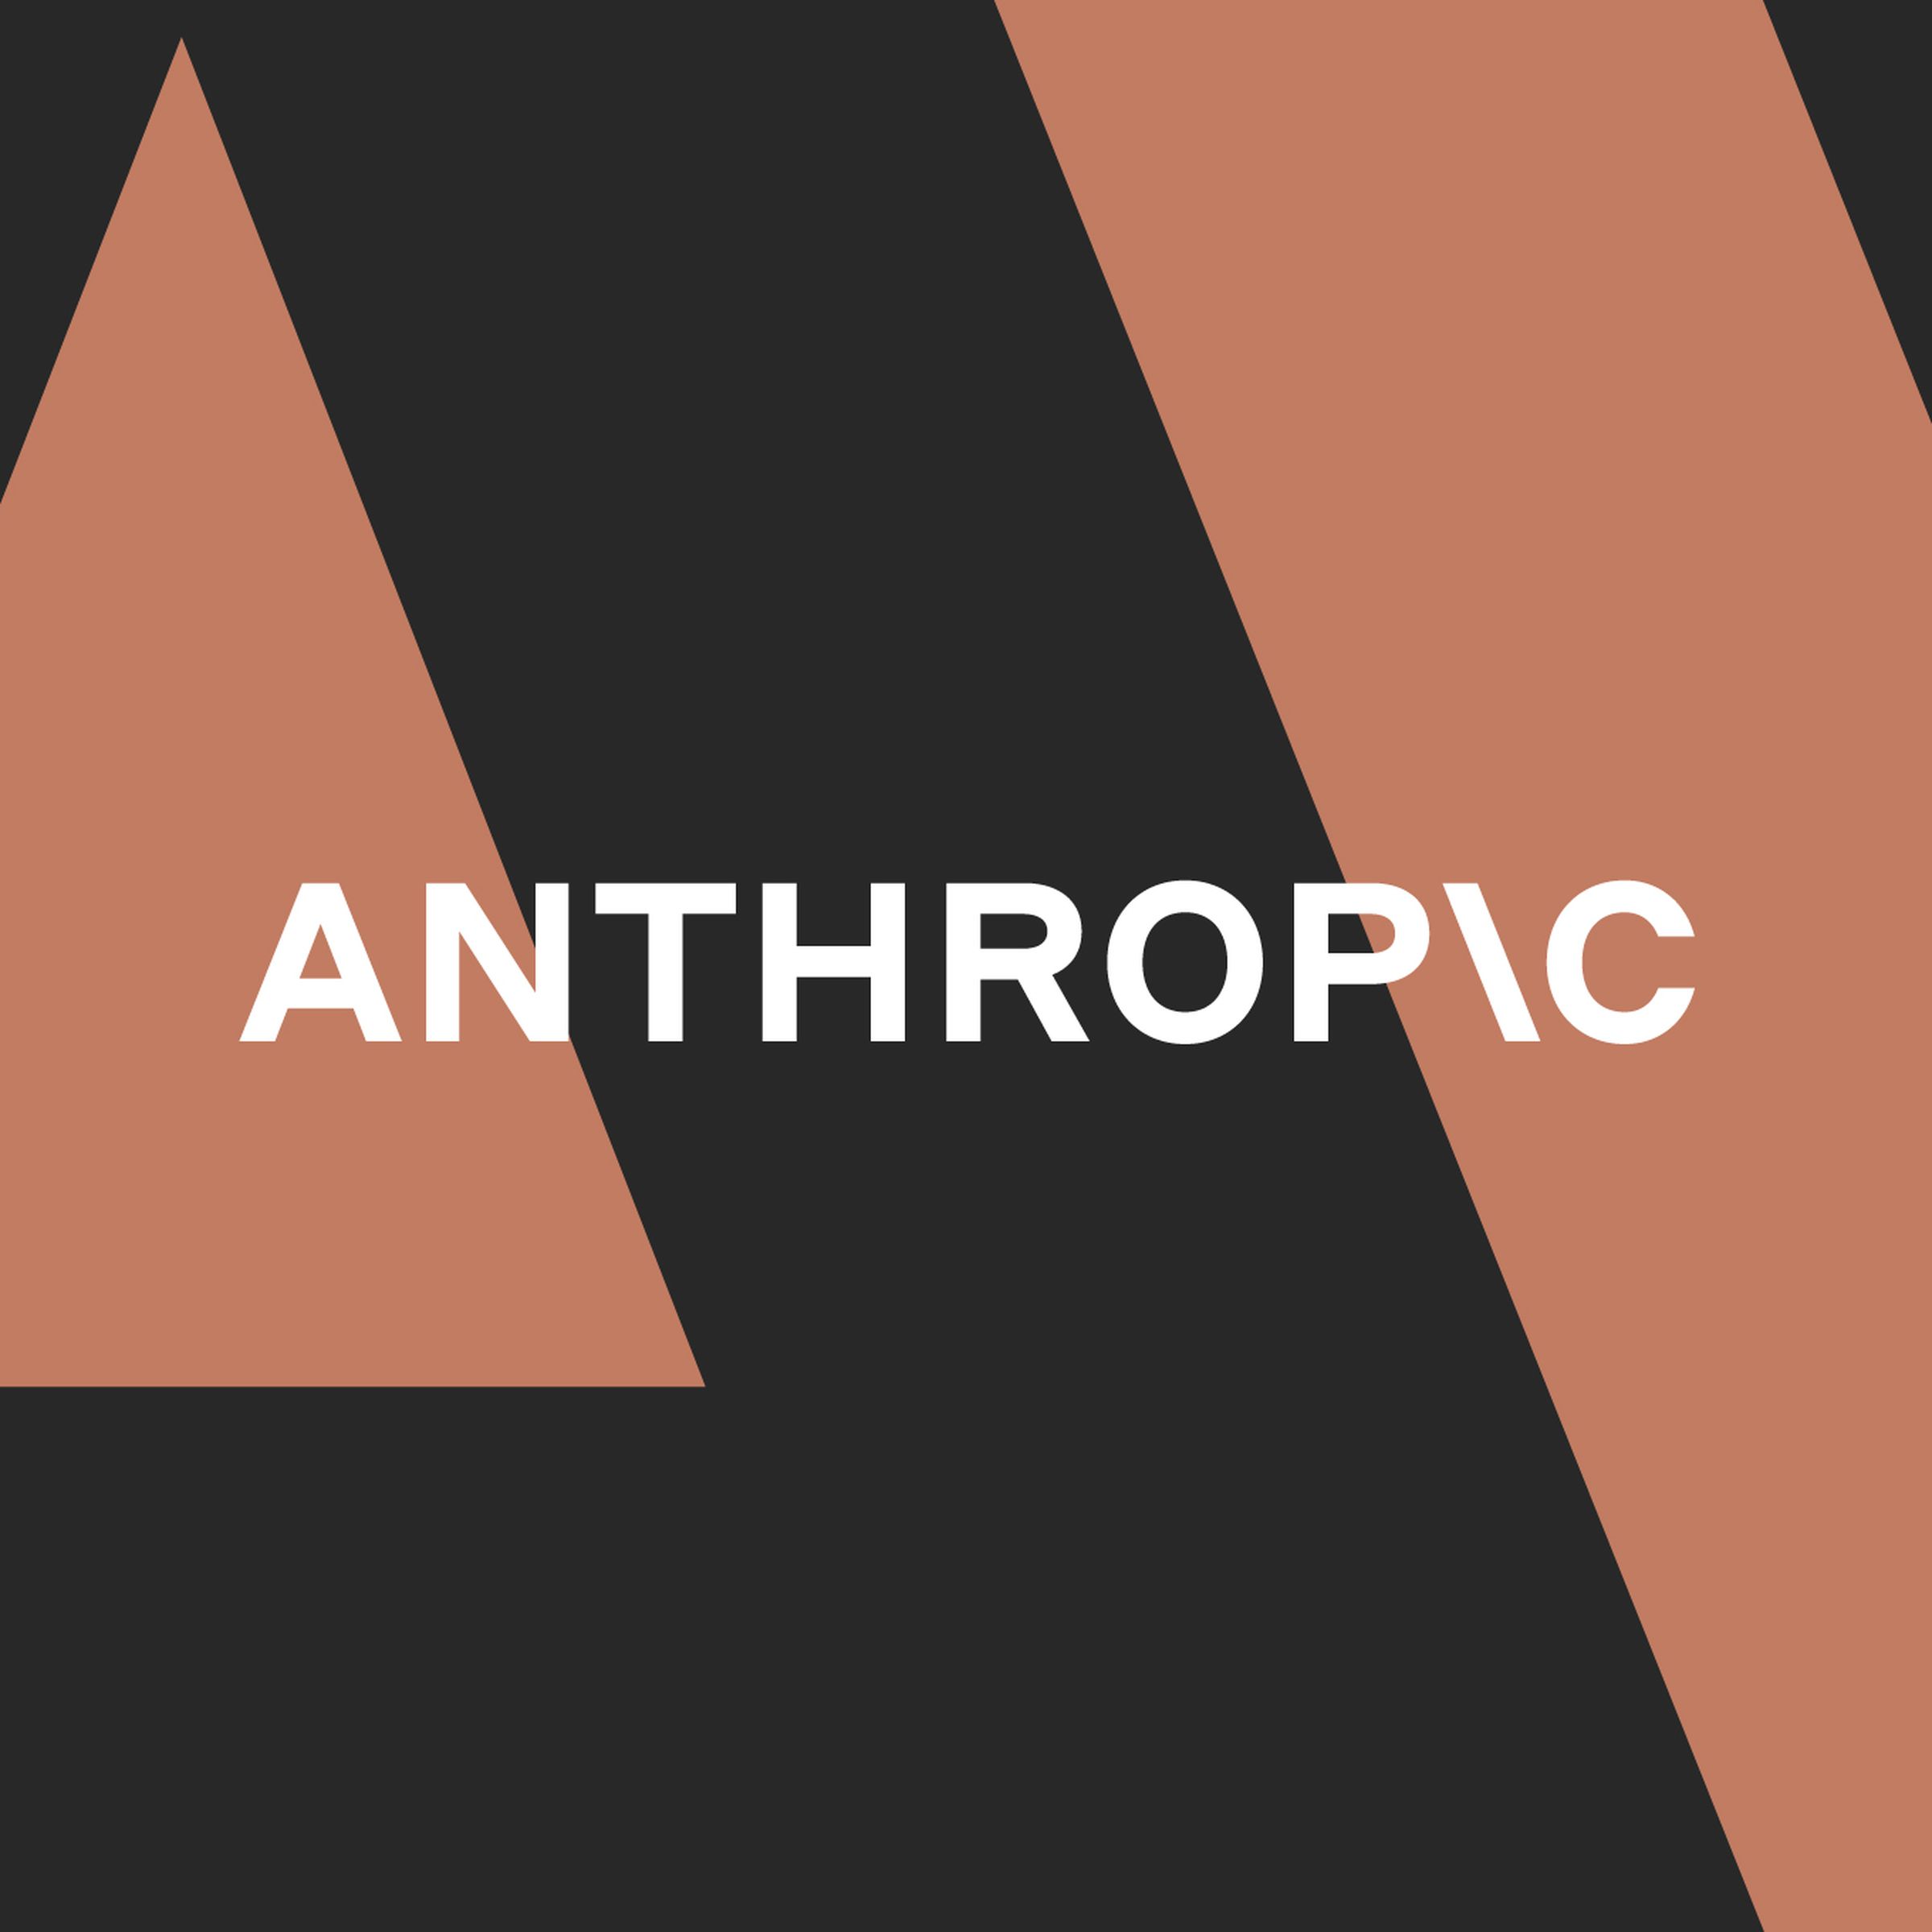 Vector illustration of the Anthropic logo.